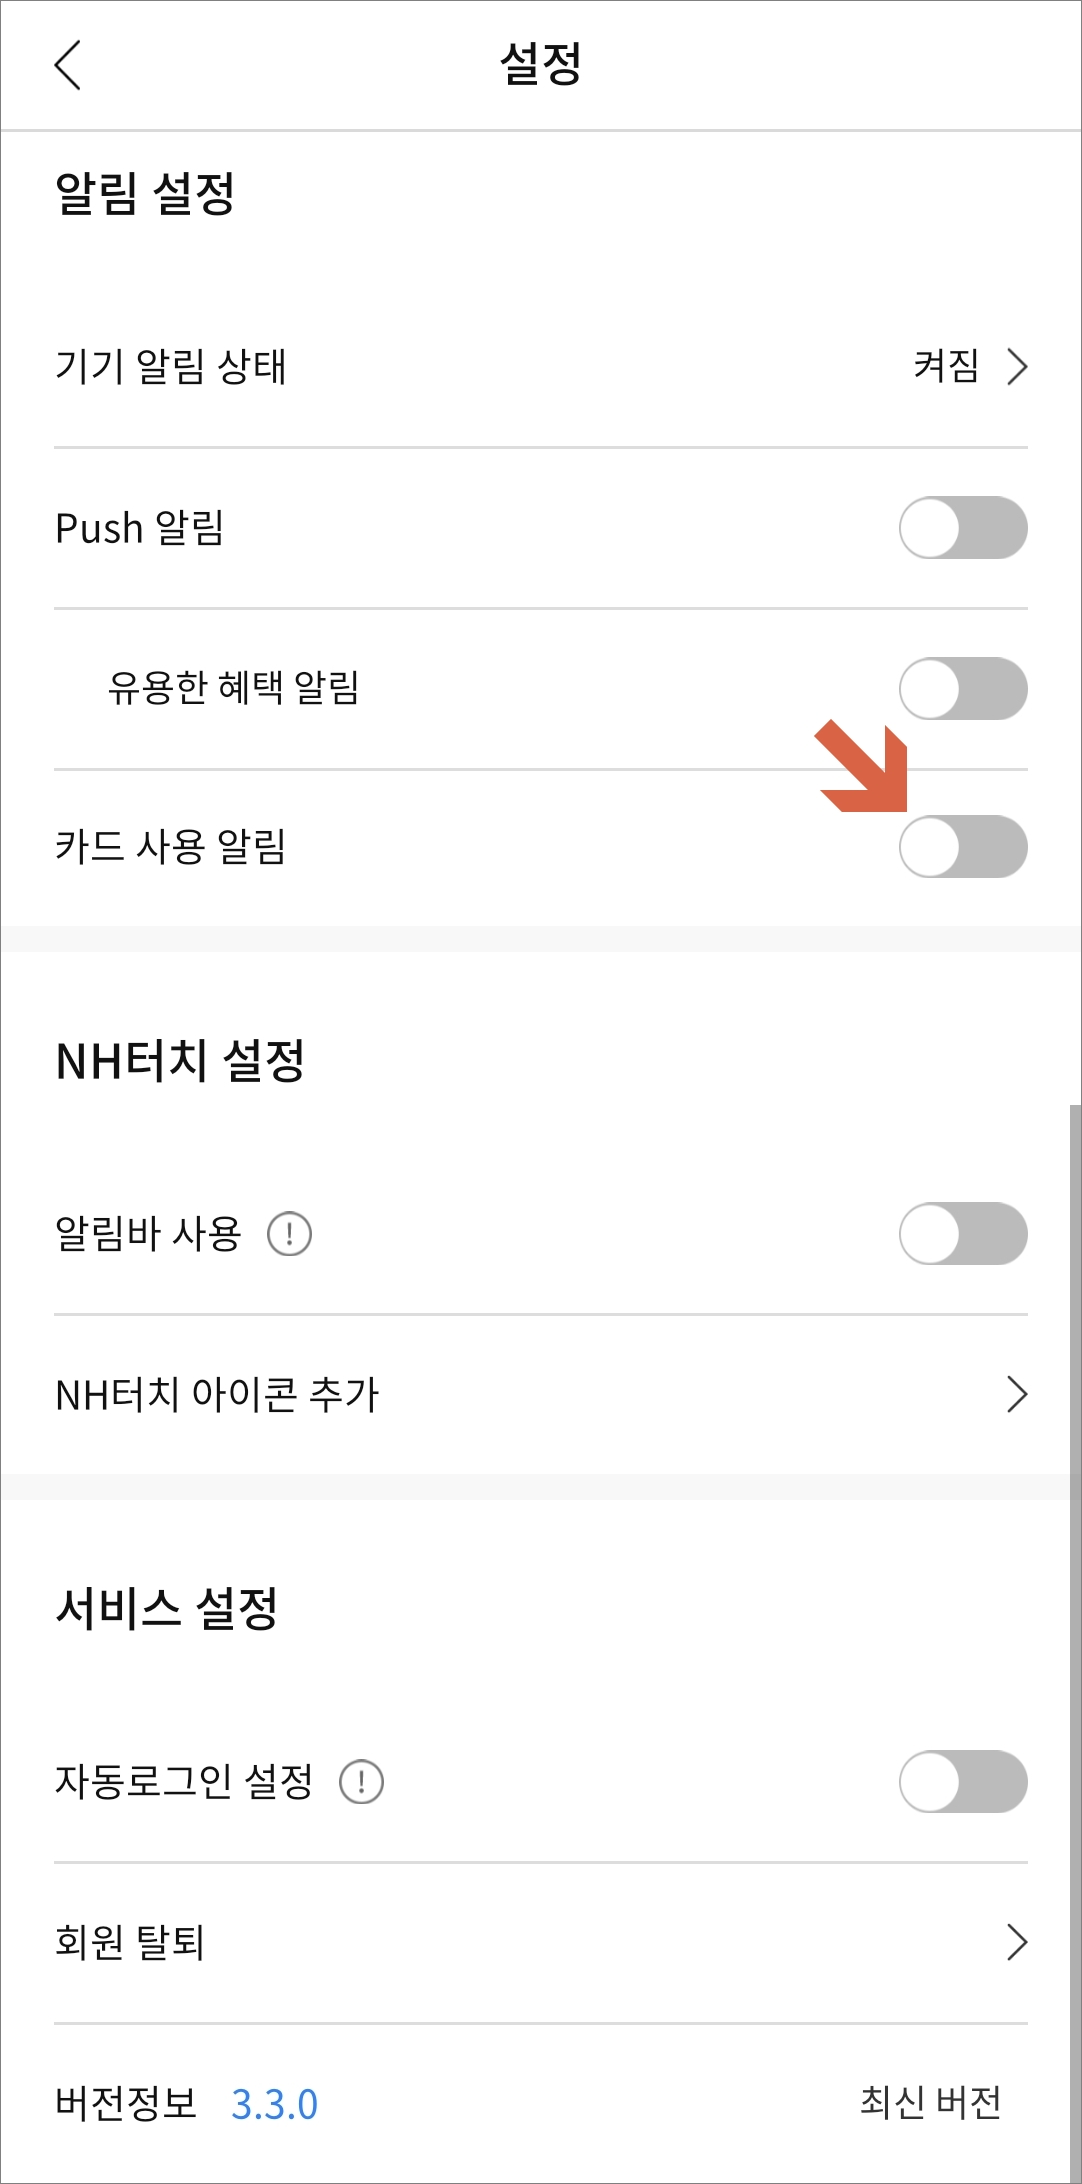 Nh Pay 앱 농협카드 결제사용내역 푸시 알림 설정 방법 :: Mobile World